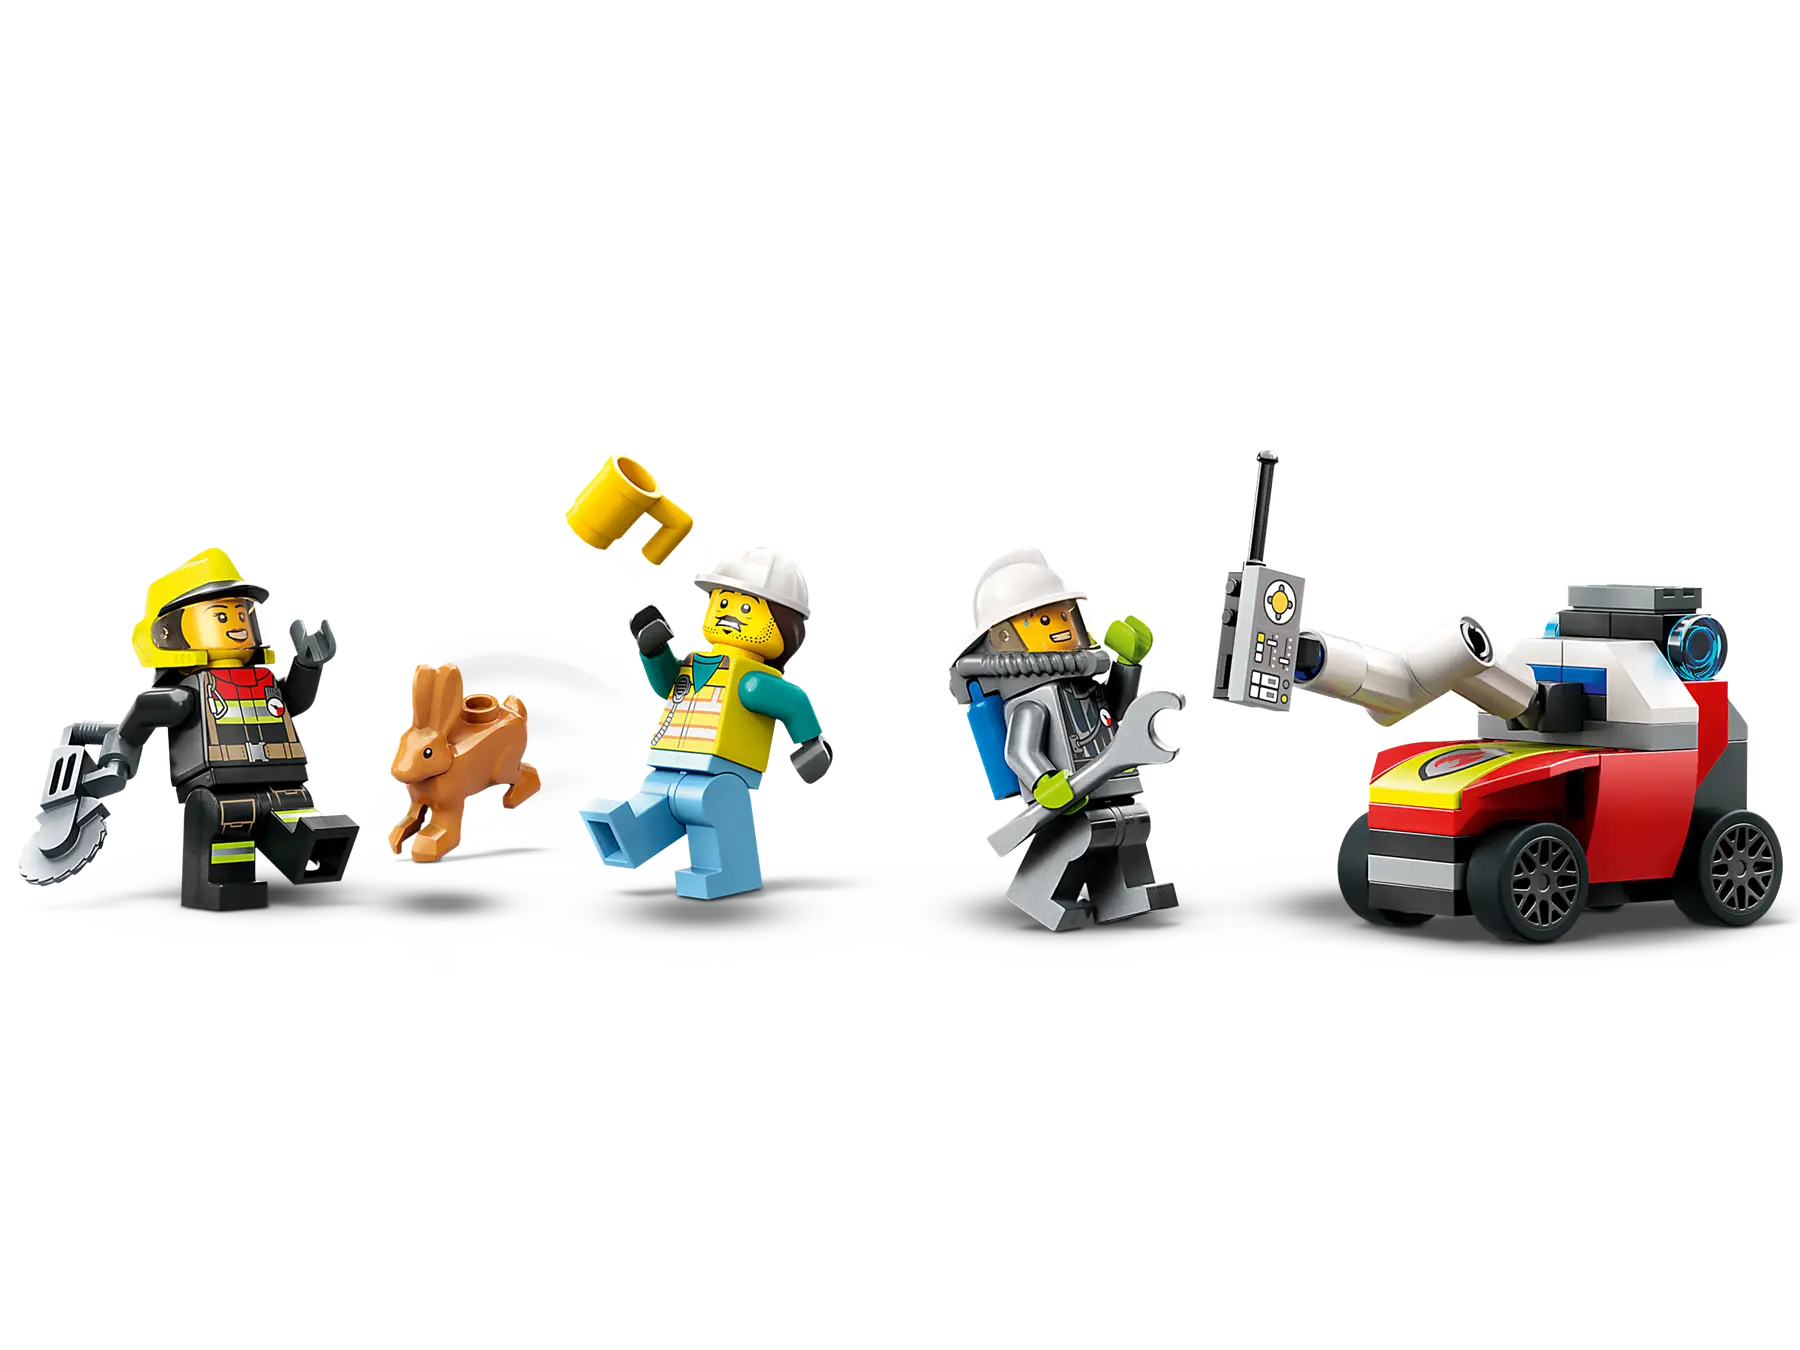 Lego City - Fire Command Truck